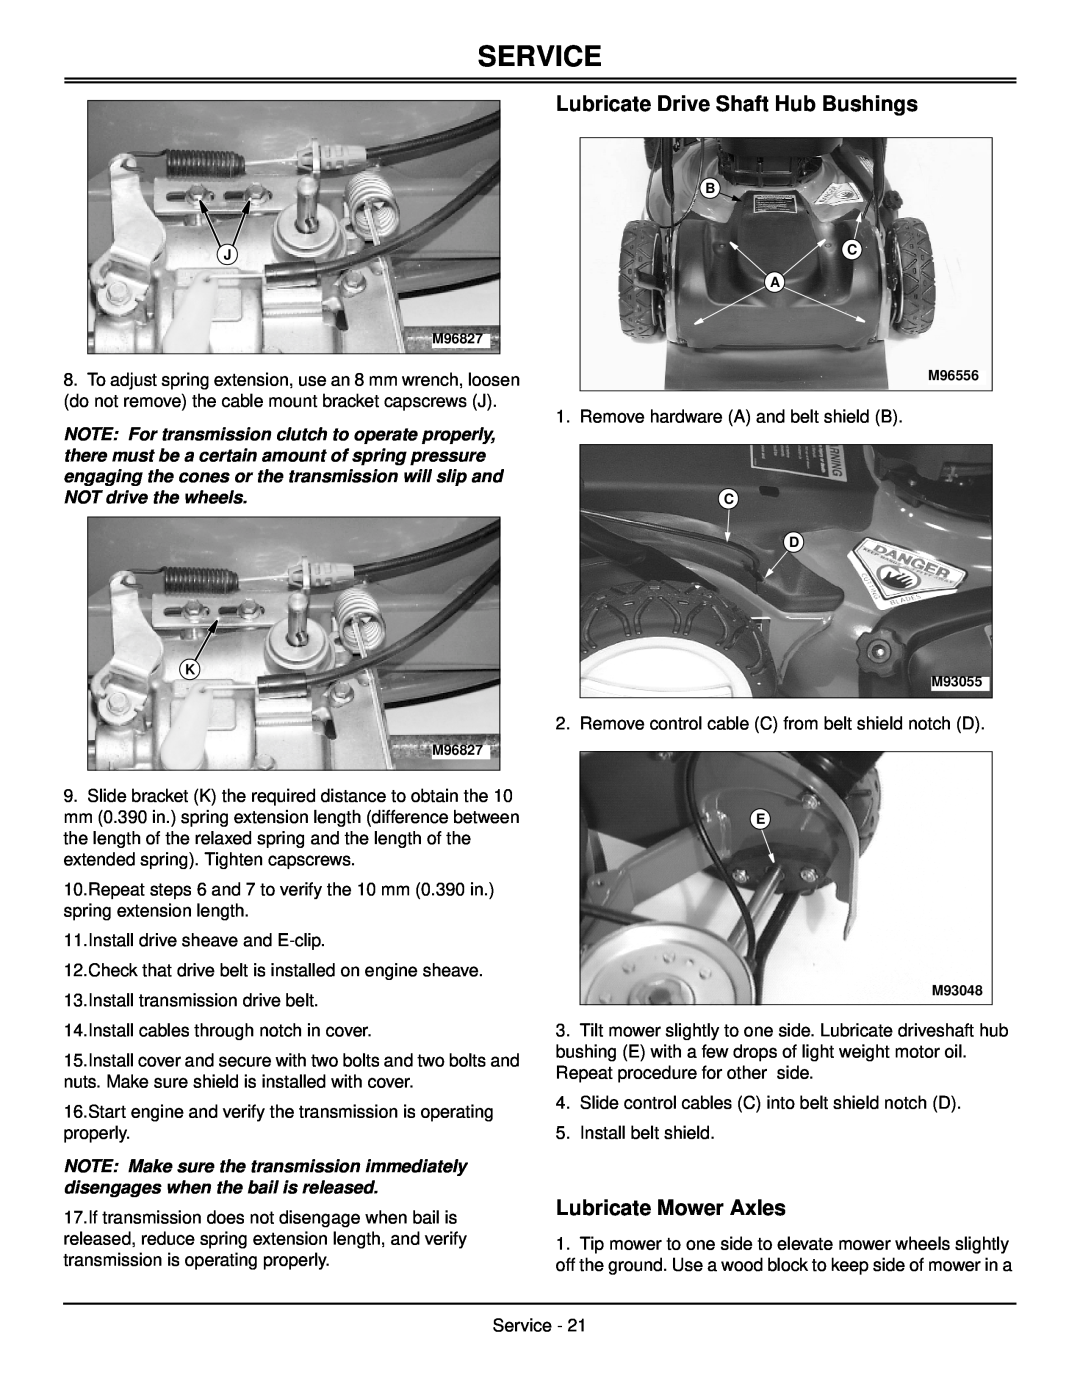 Scotts SP6211, SP6213 manual Lubricate Drive Shaft Hub Bushings, Lubricate Mower Axles, Service 